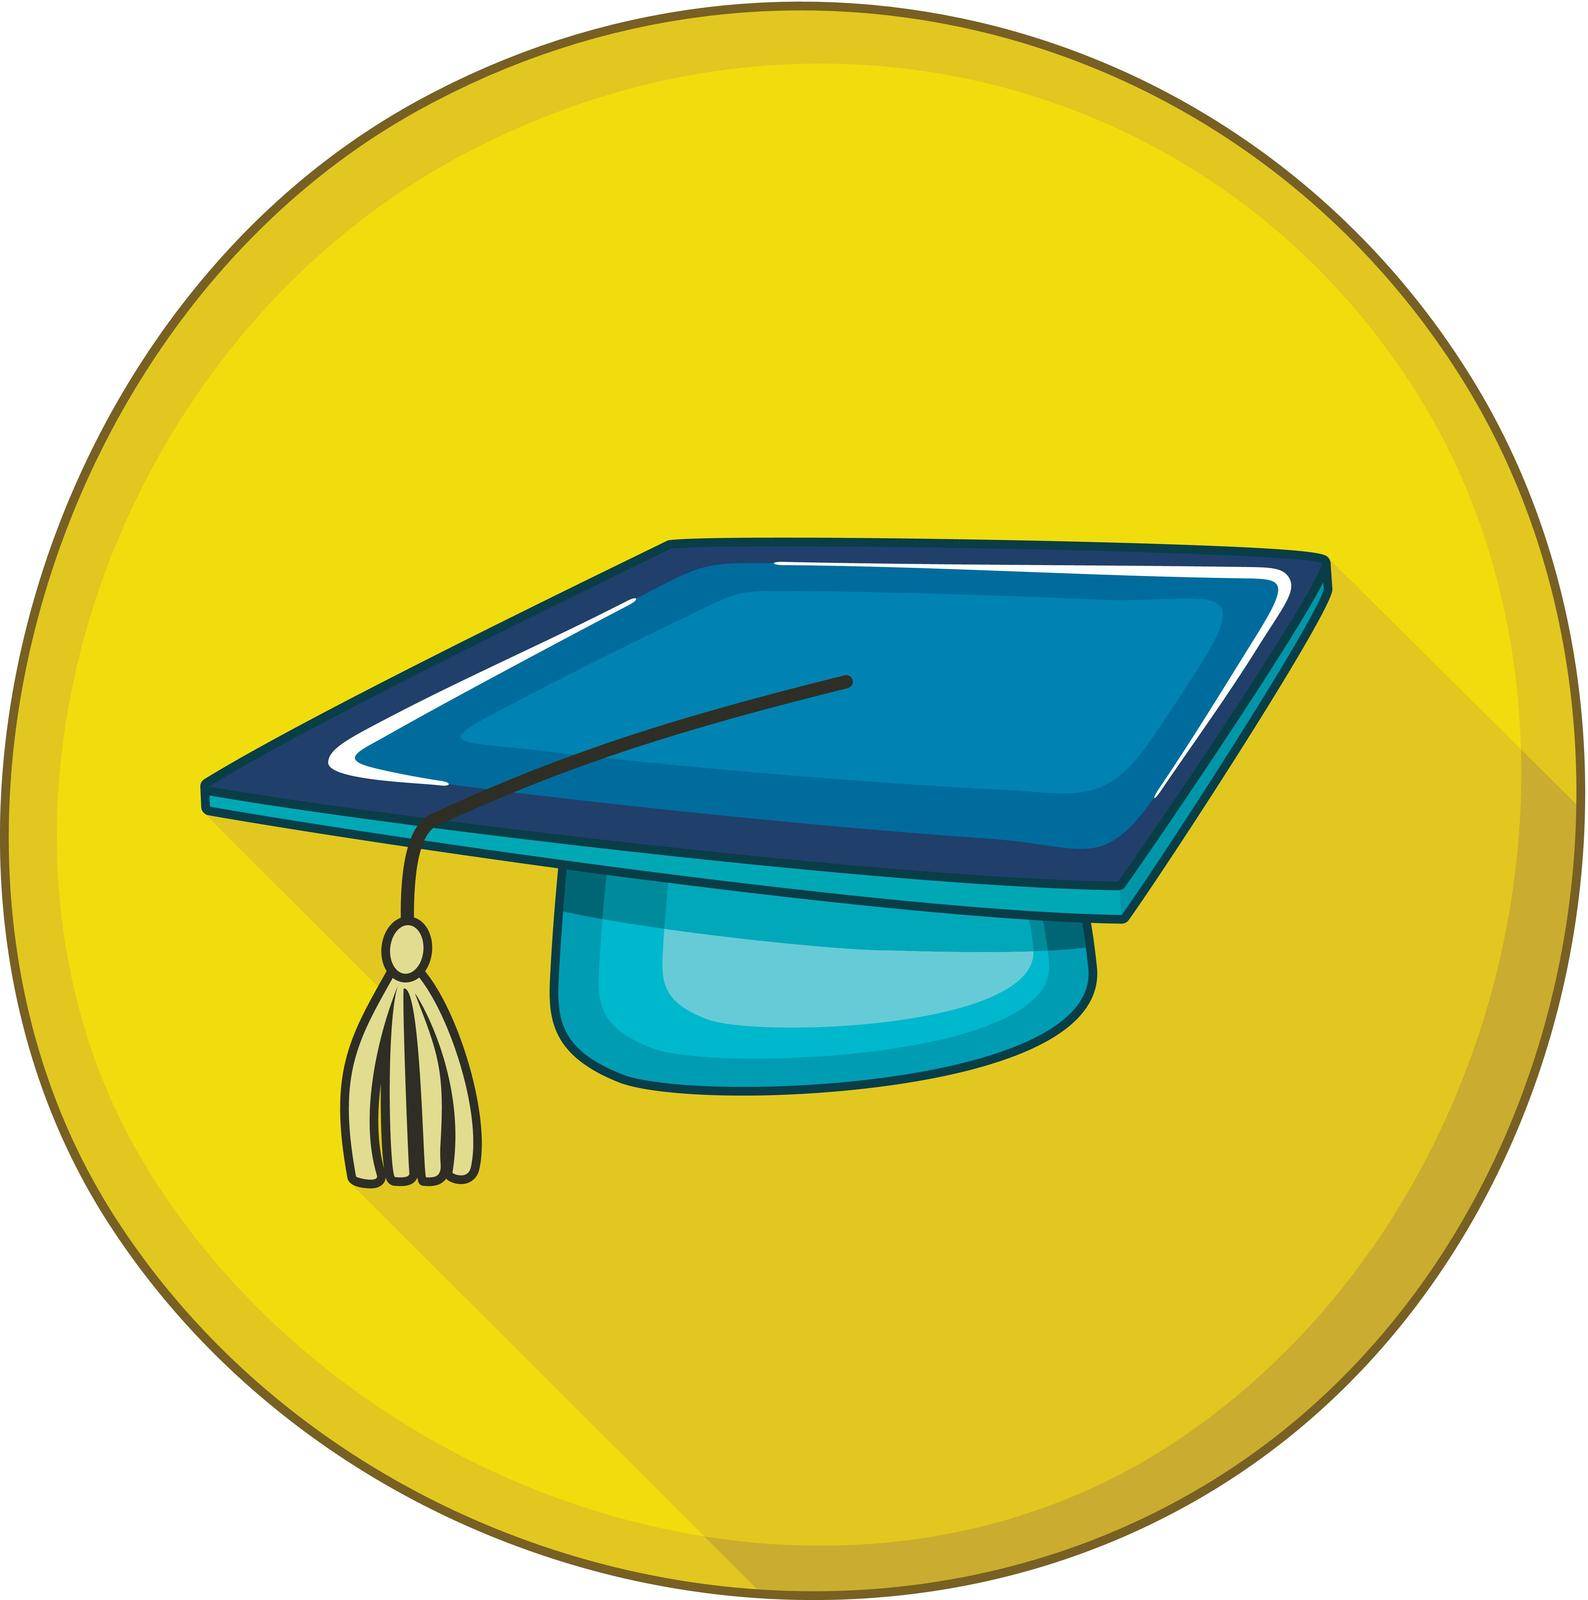 Graduation Cap flat icon by nosik